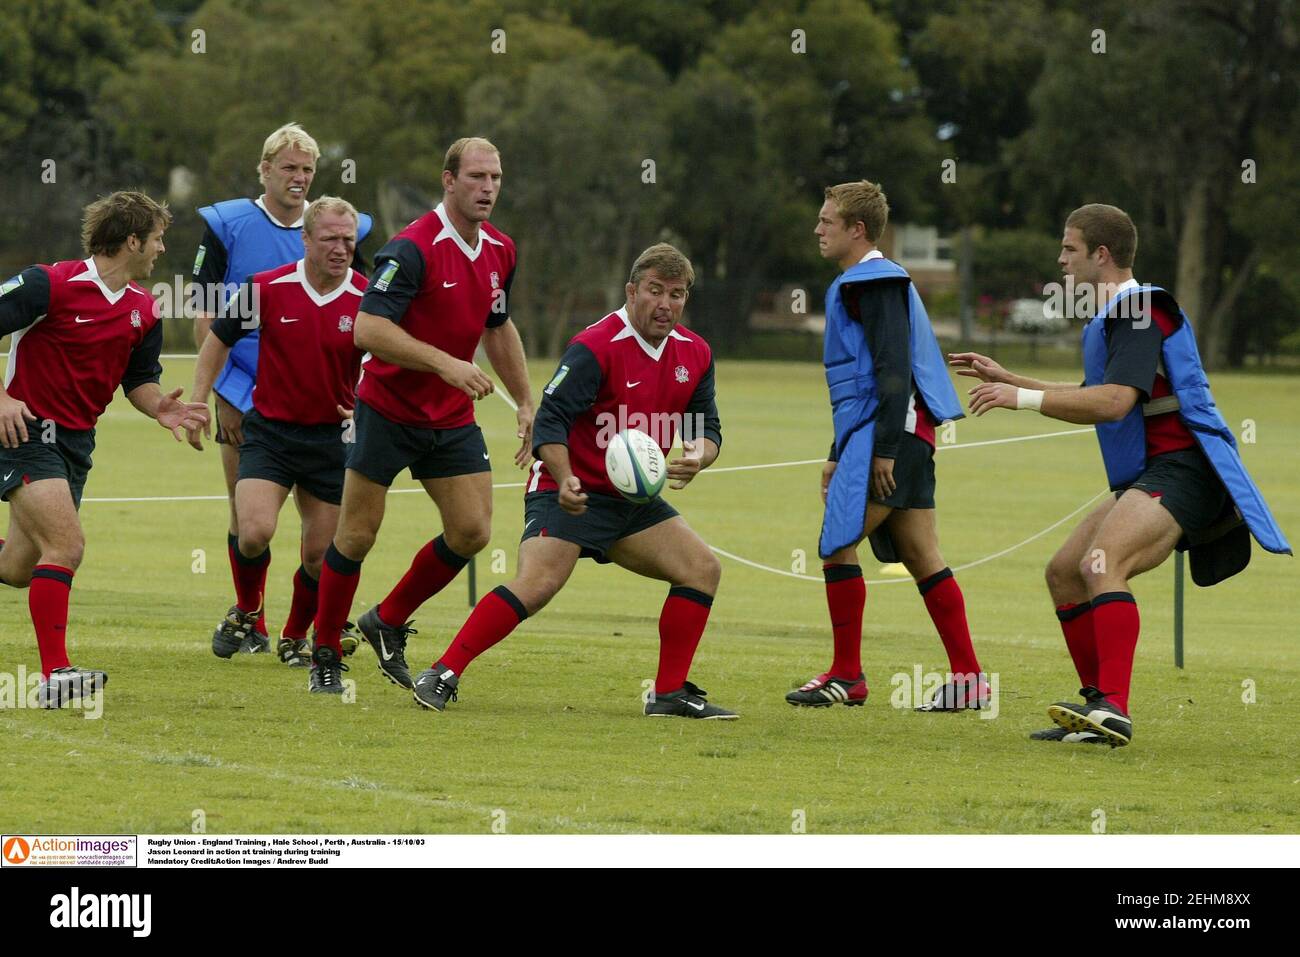 Rugby Union - England Training , Hale School , Perth , Australia - 15/10/03  Jason Leonard in action at training during training  Mandatory Credit:Action Images / Andrew Budd Stock Photo